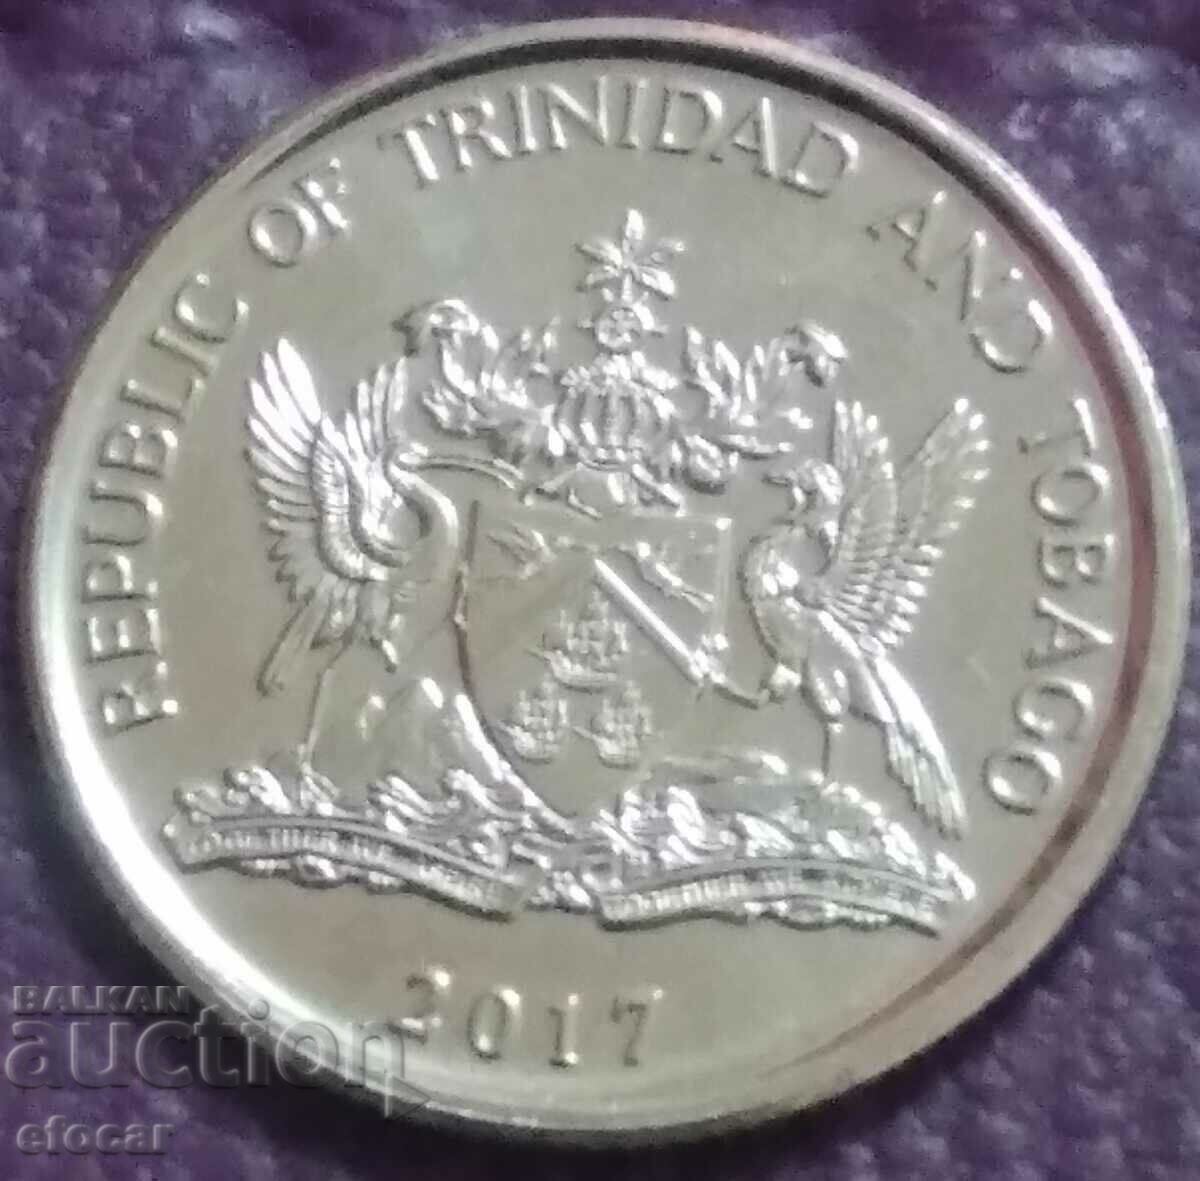 10 цента Тринидад и тобаго 2017